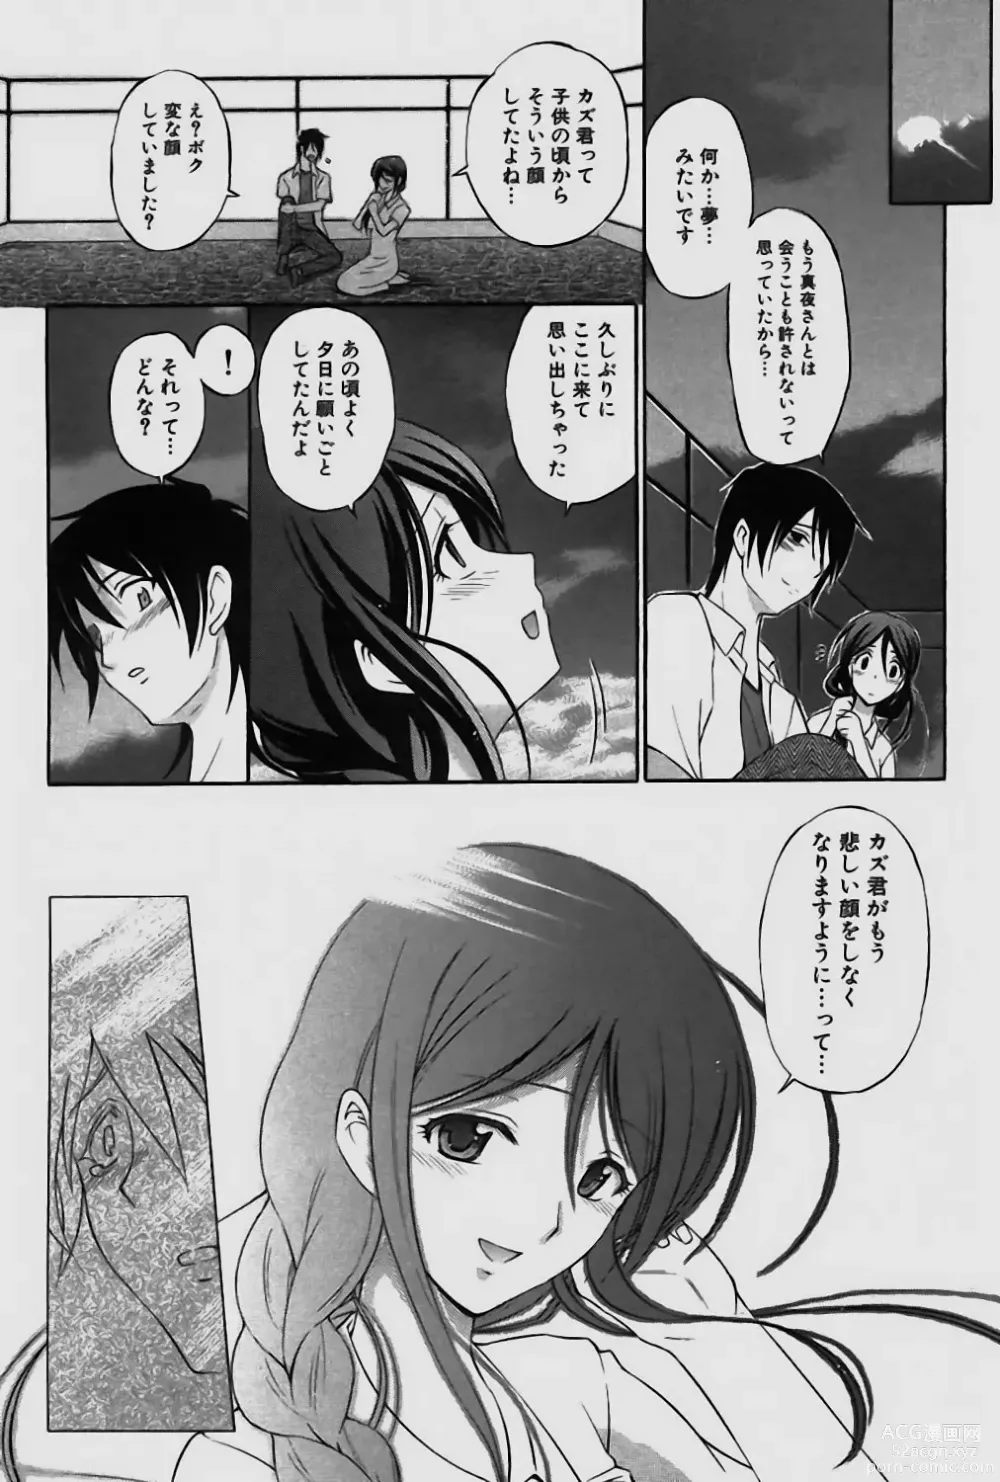 Page 194 of manga Sareruga MaMa